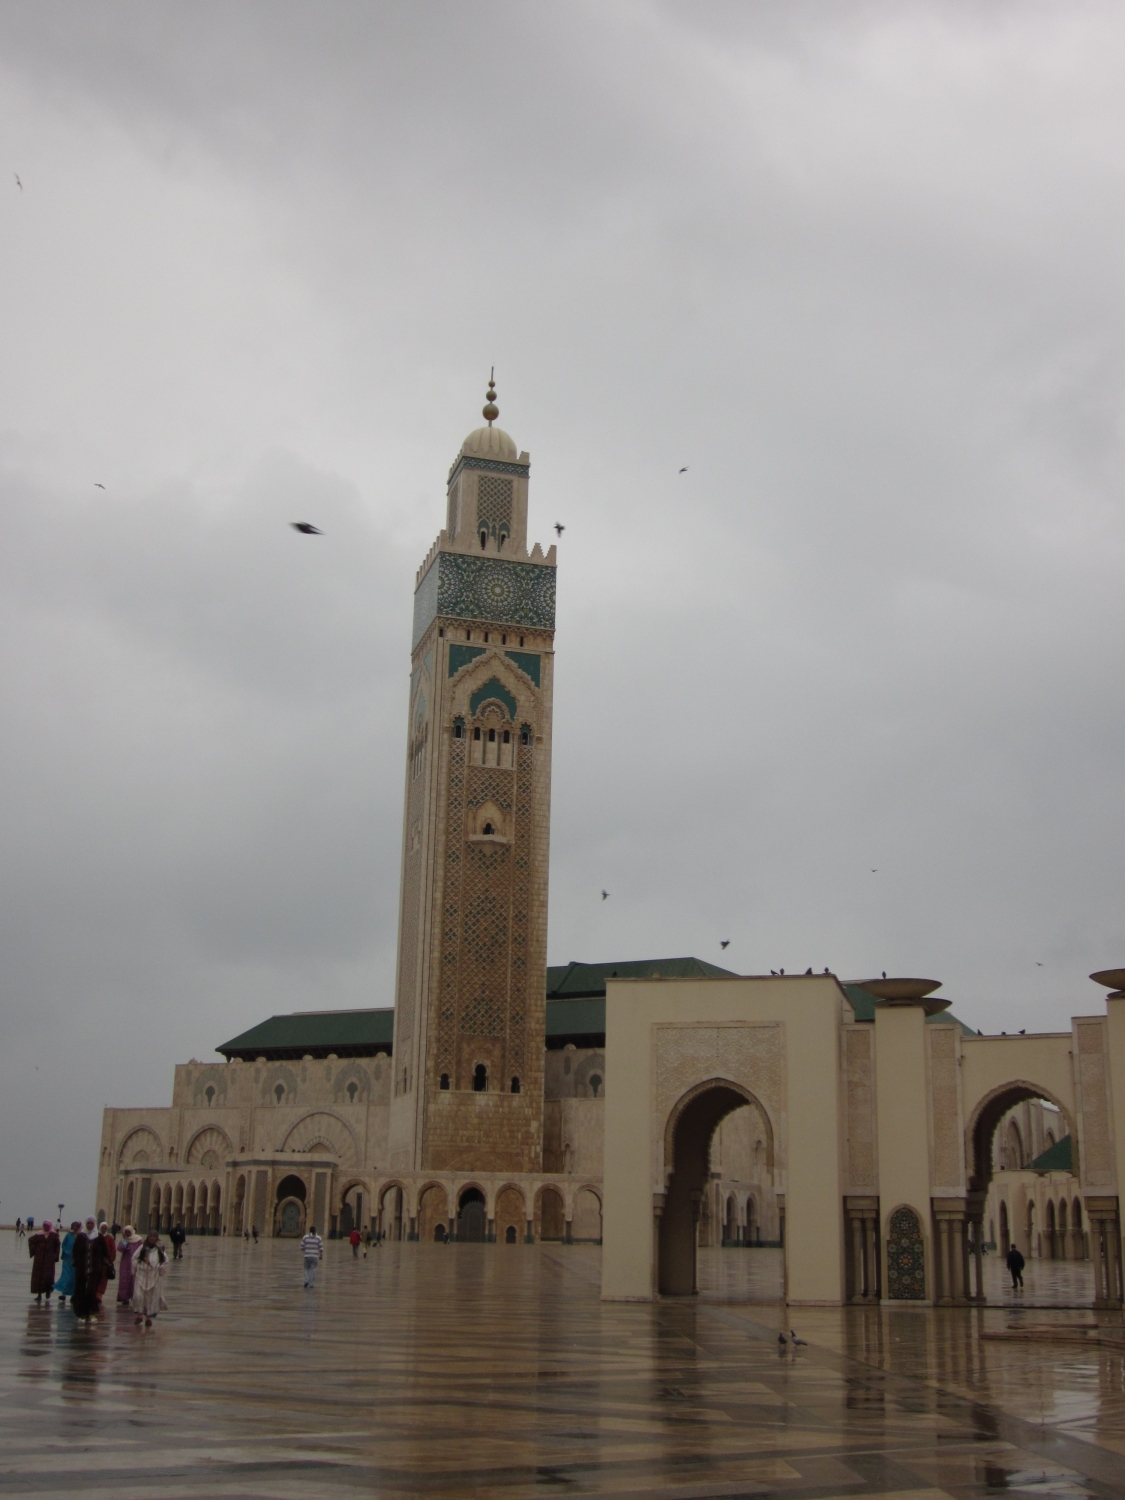 View to northwest across entrance plaza to minaret